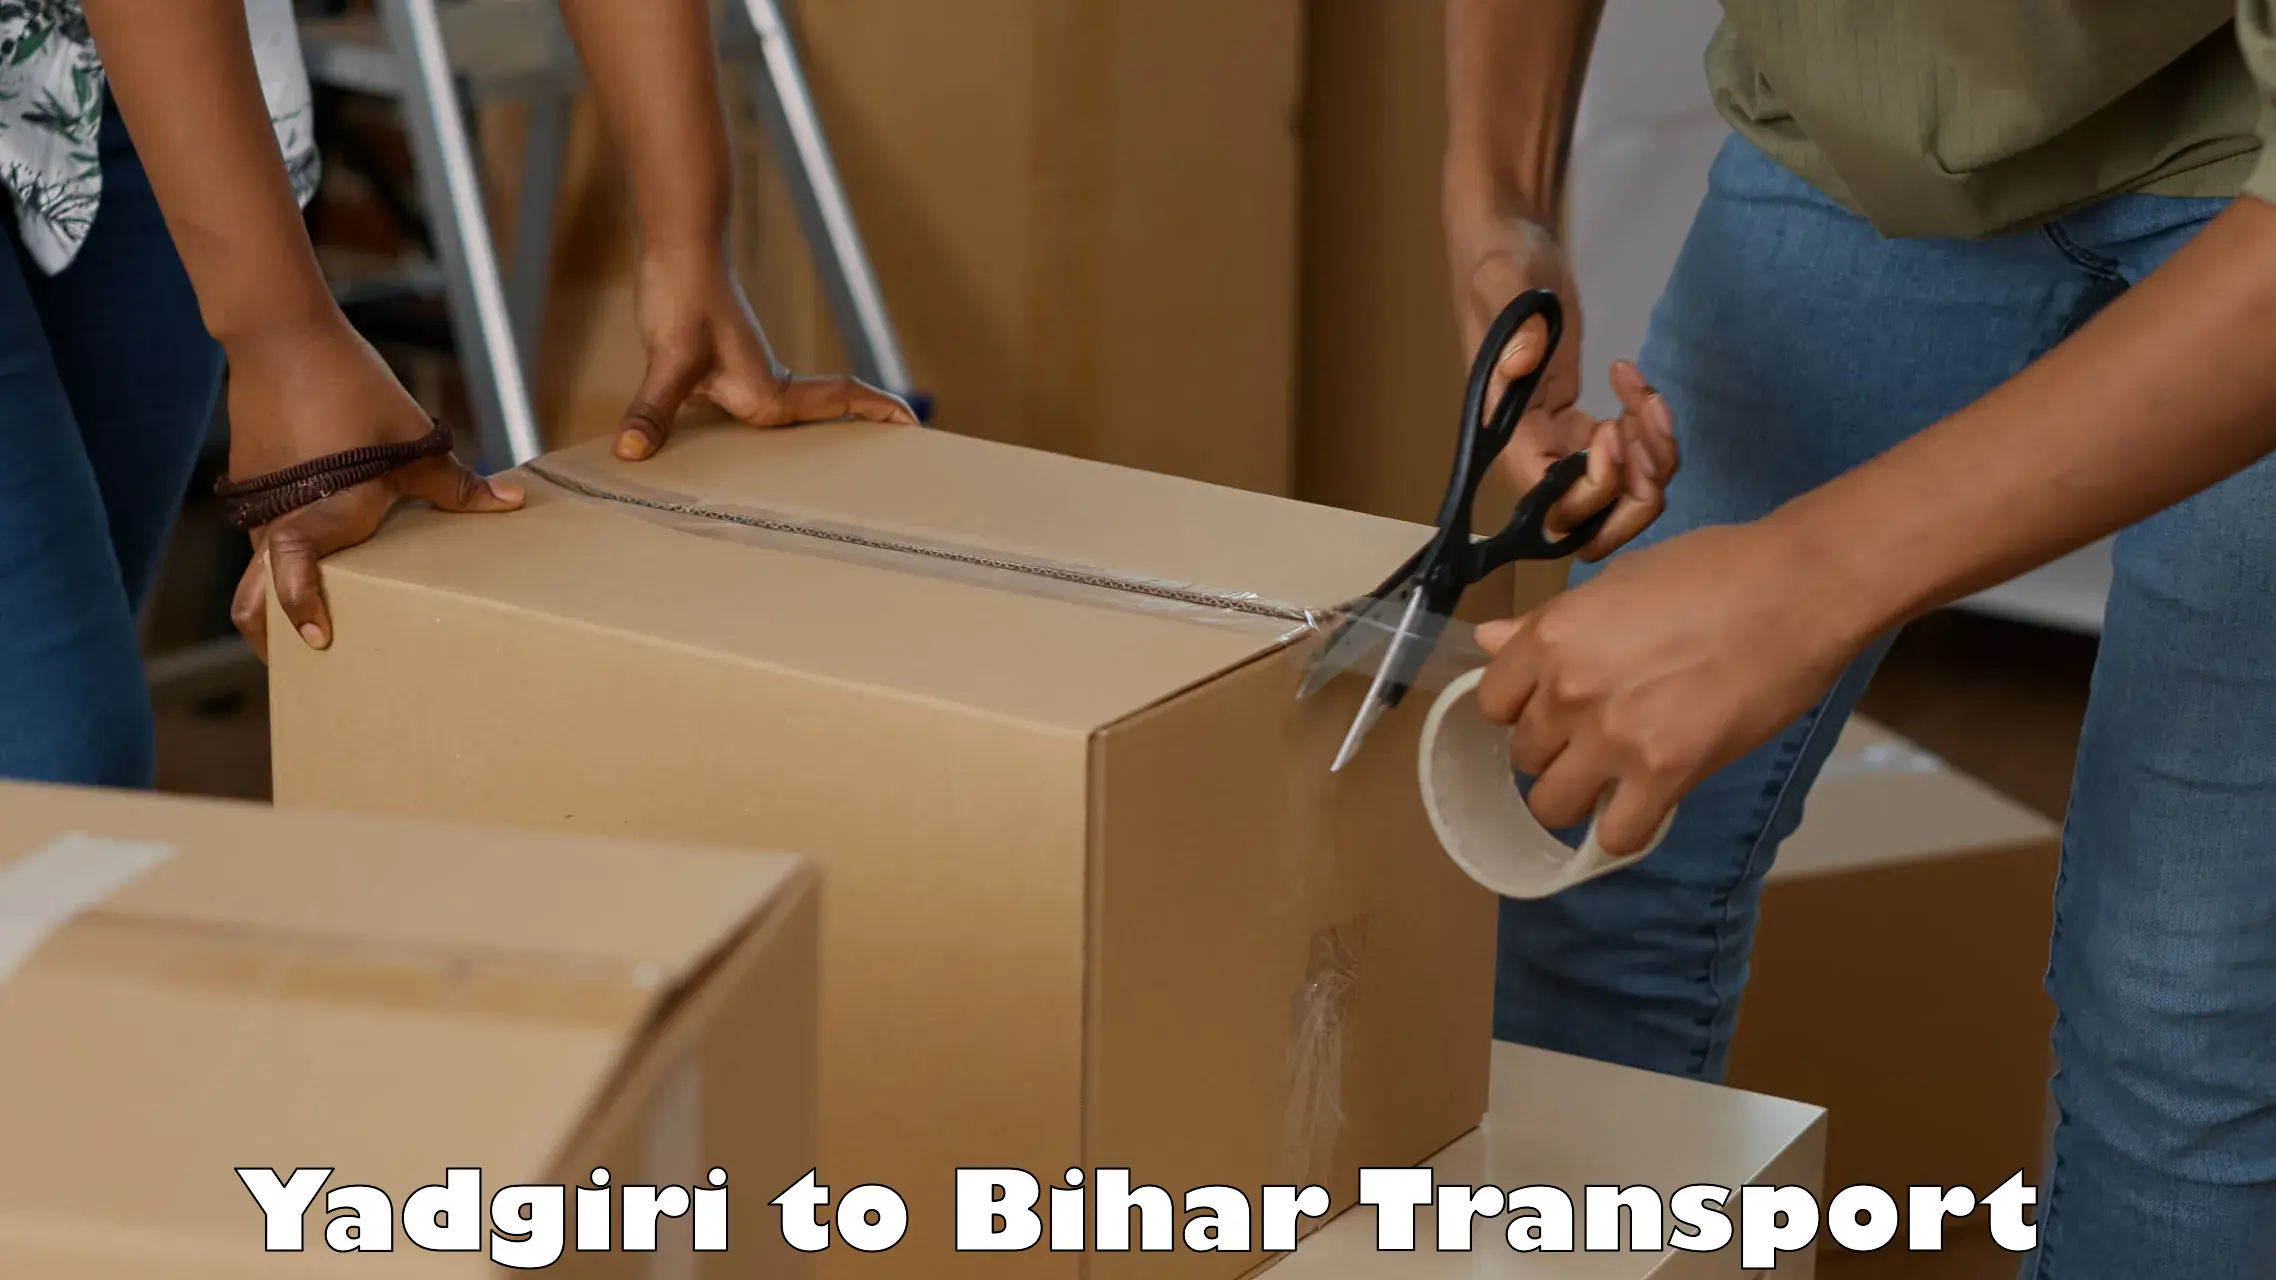 Furniture transport service Yadgiri to Rajgir